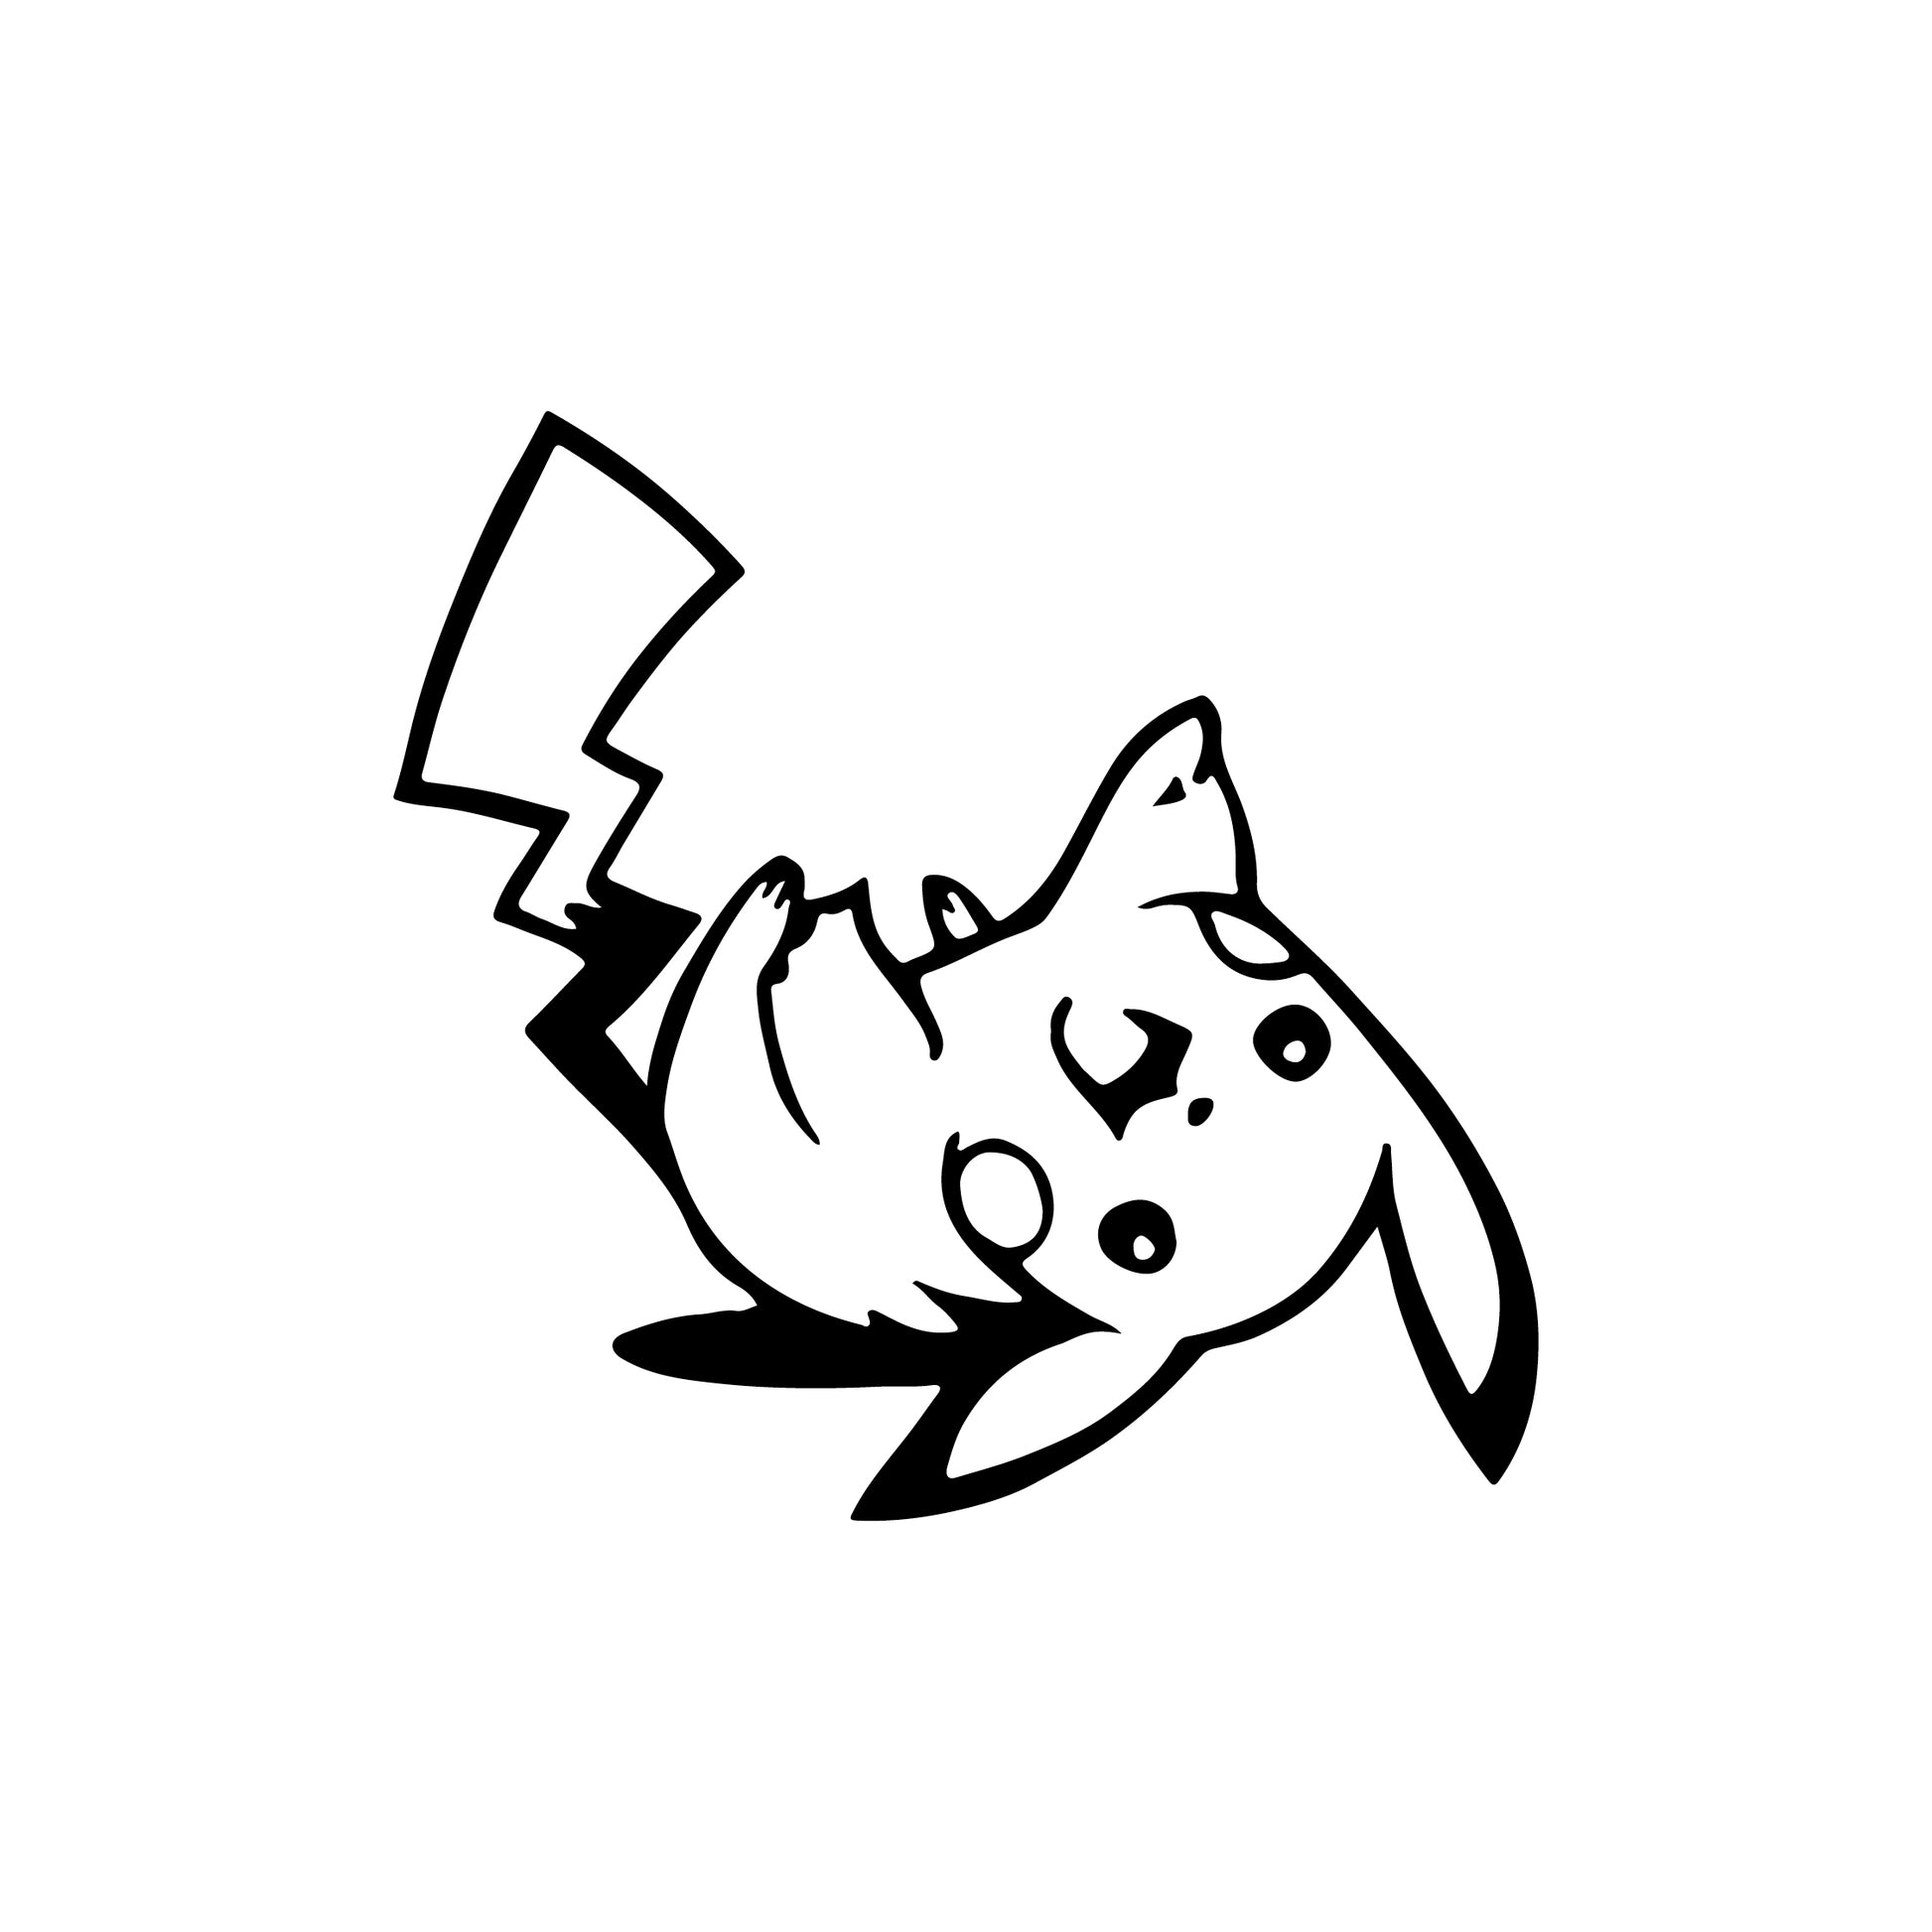 Pokemon Pikatchu - Ipad decal vinyl sticker design